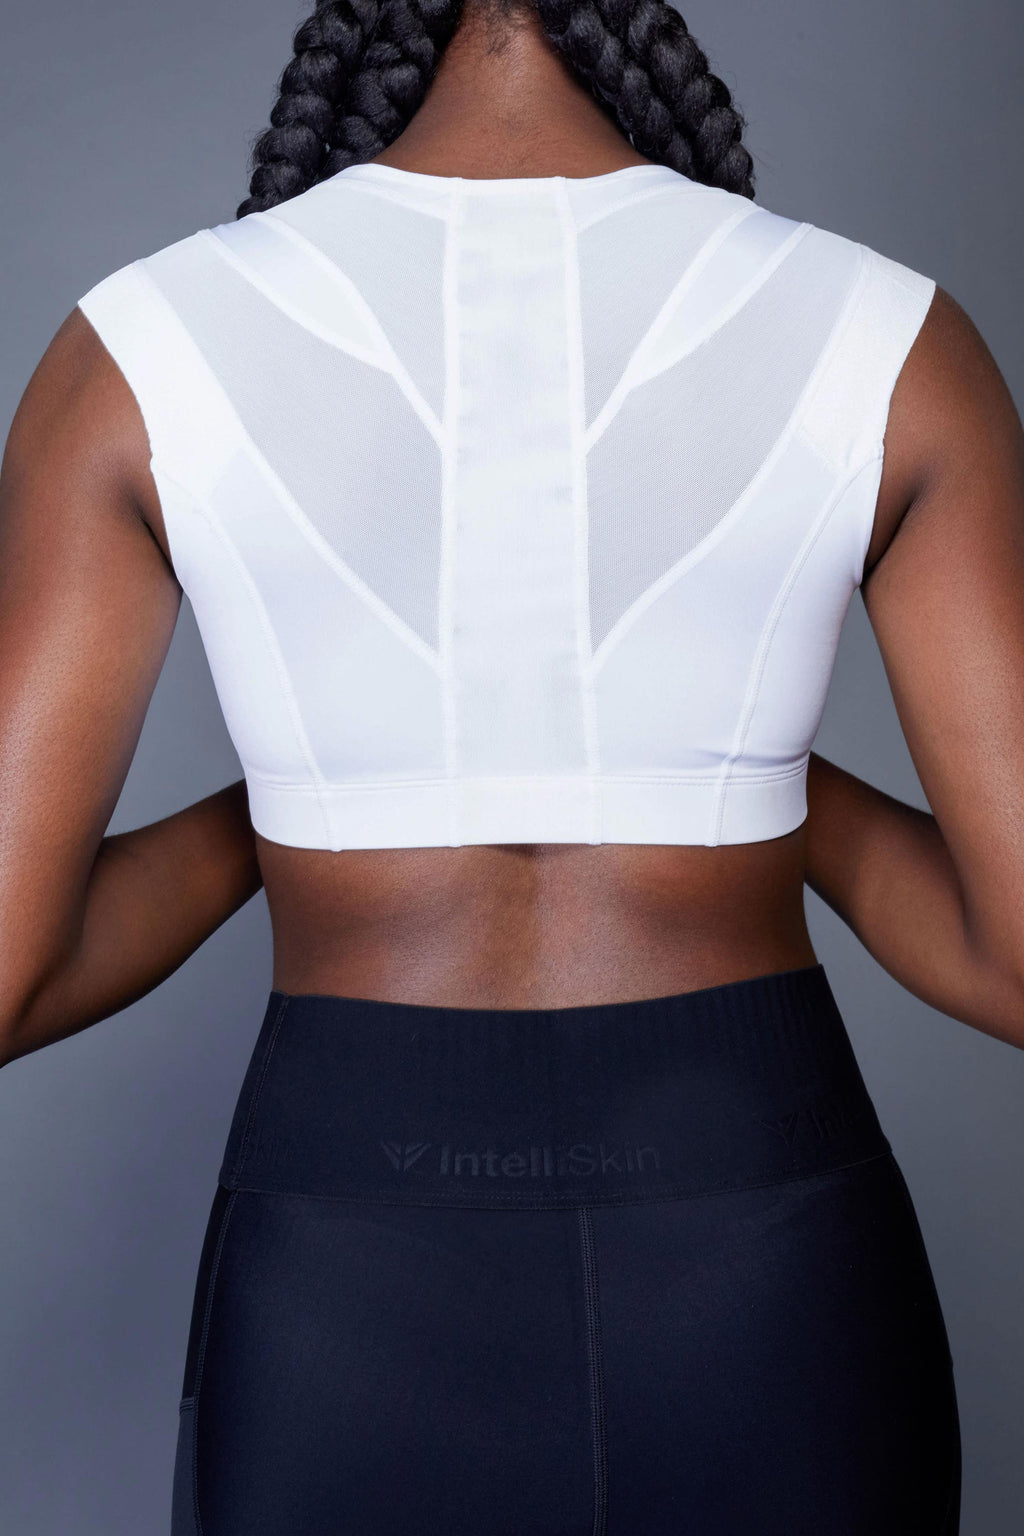 Forme Power Bra review: a posture-correcting sports bra